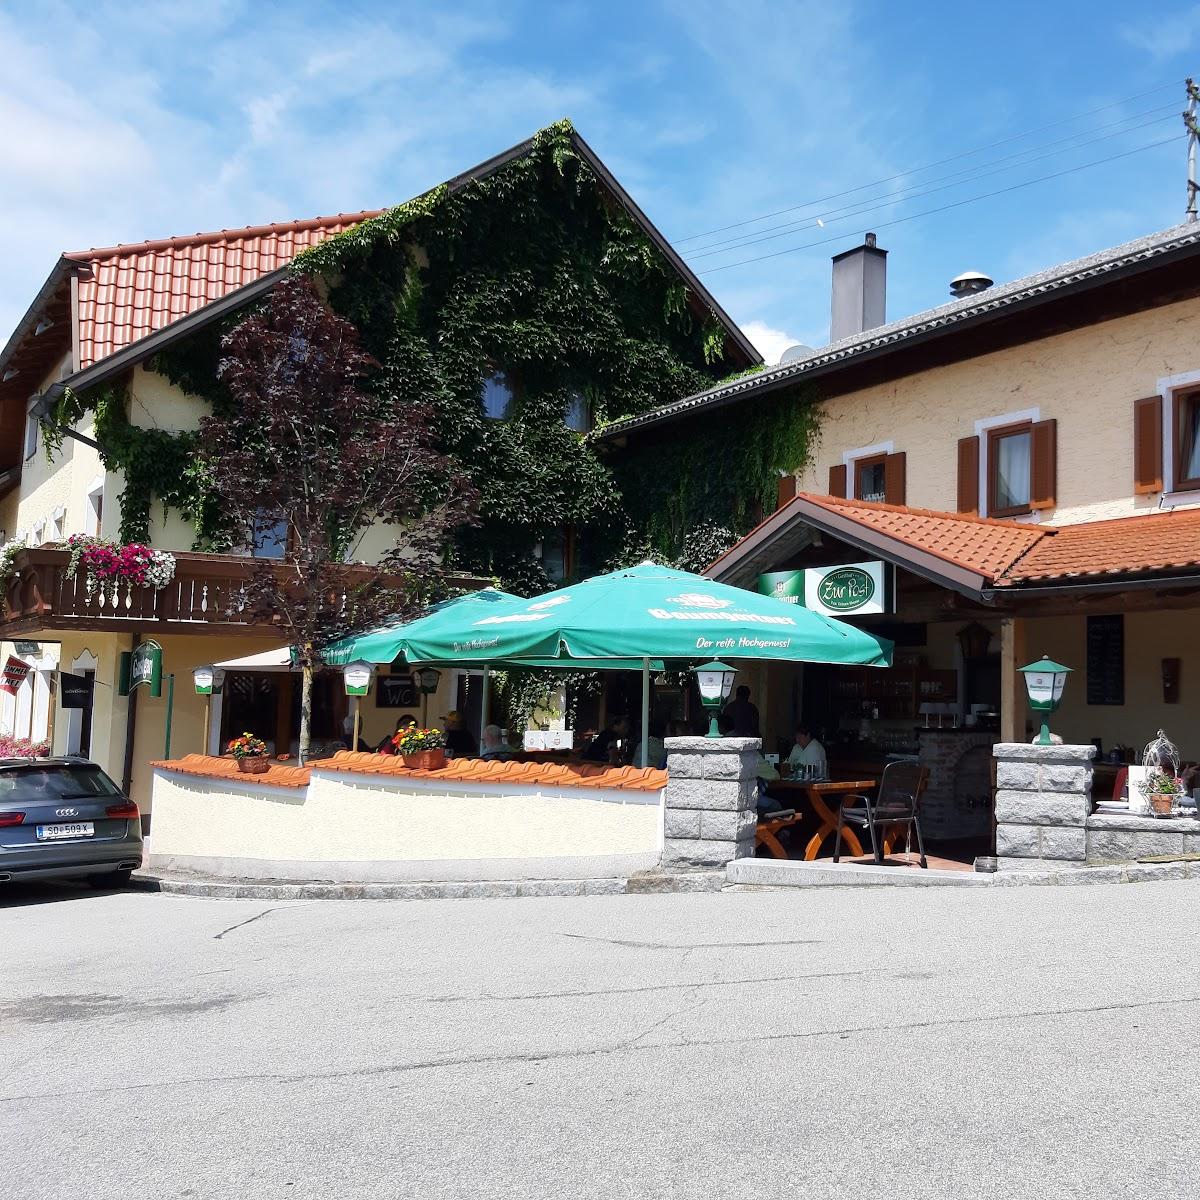 Restaurant "Gasthof Zur Post" in Kopfing im Innkreis